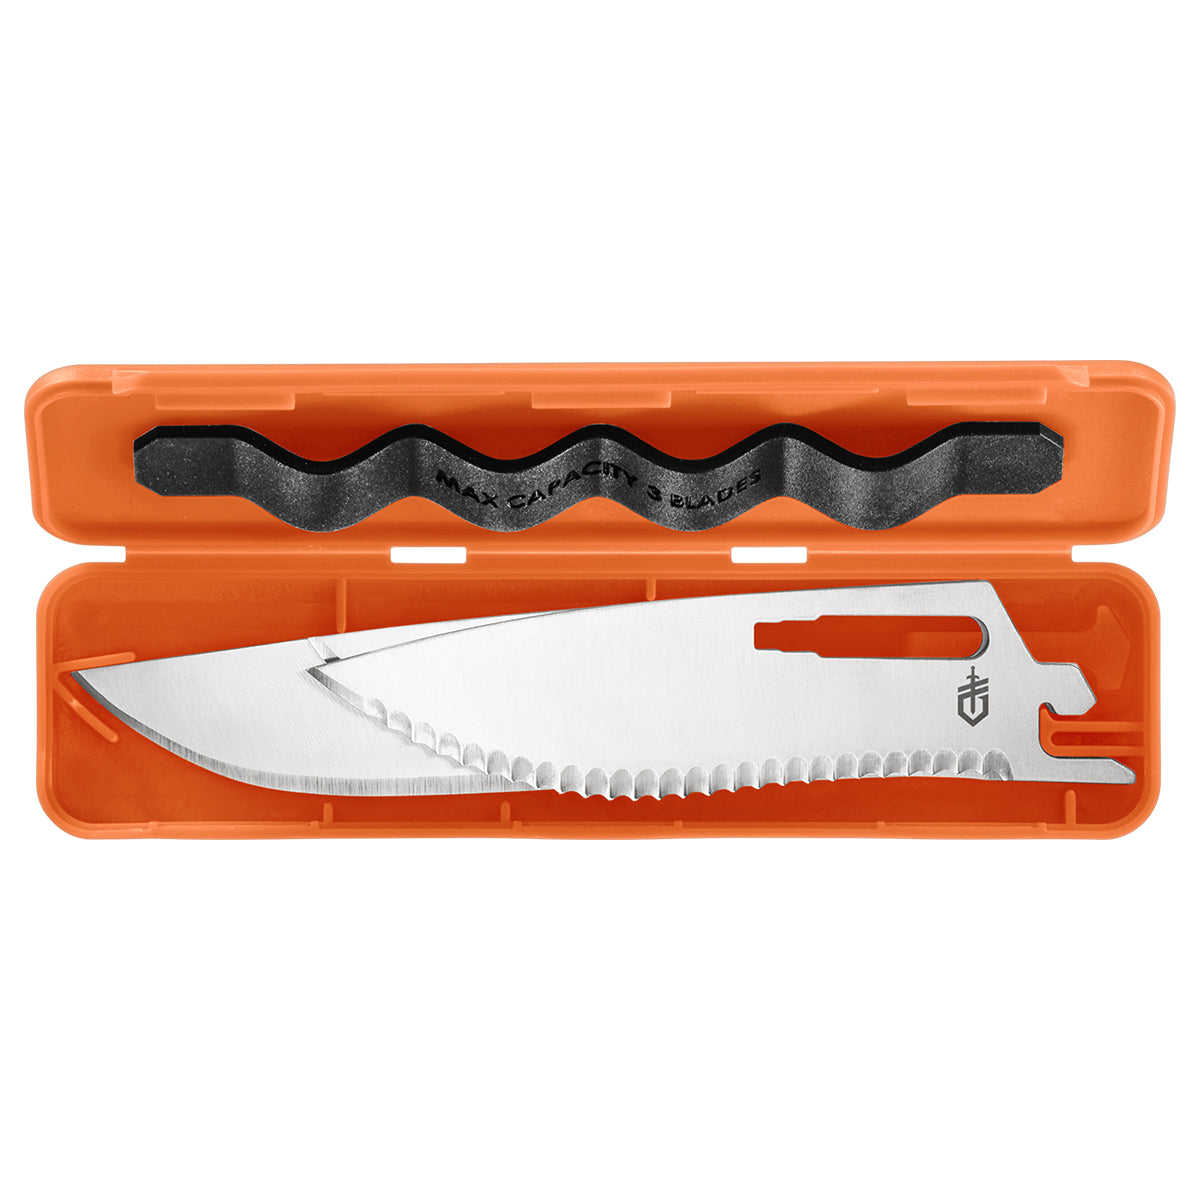 Gerber Randy Newberg EBS Knife in Randy Newberg EBS Knife by Gerber | Gear - goHUNT Shop by GOHUNT | Gerber - GOHUNT Shop